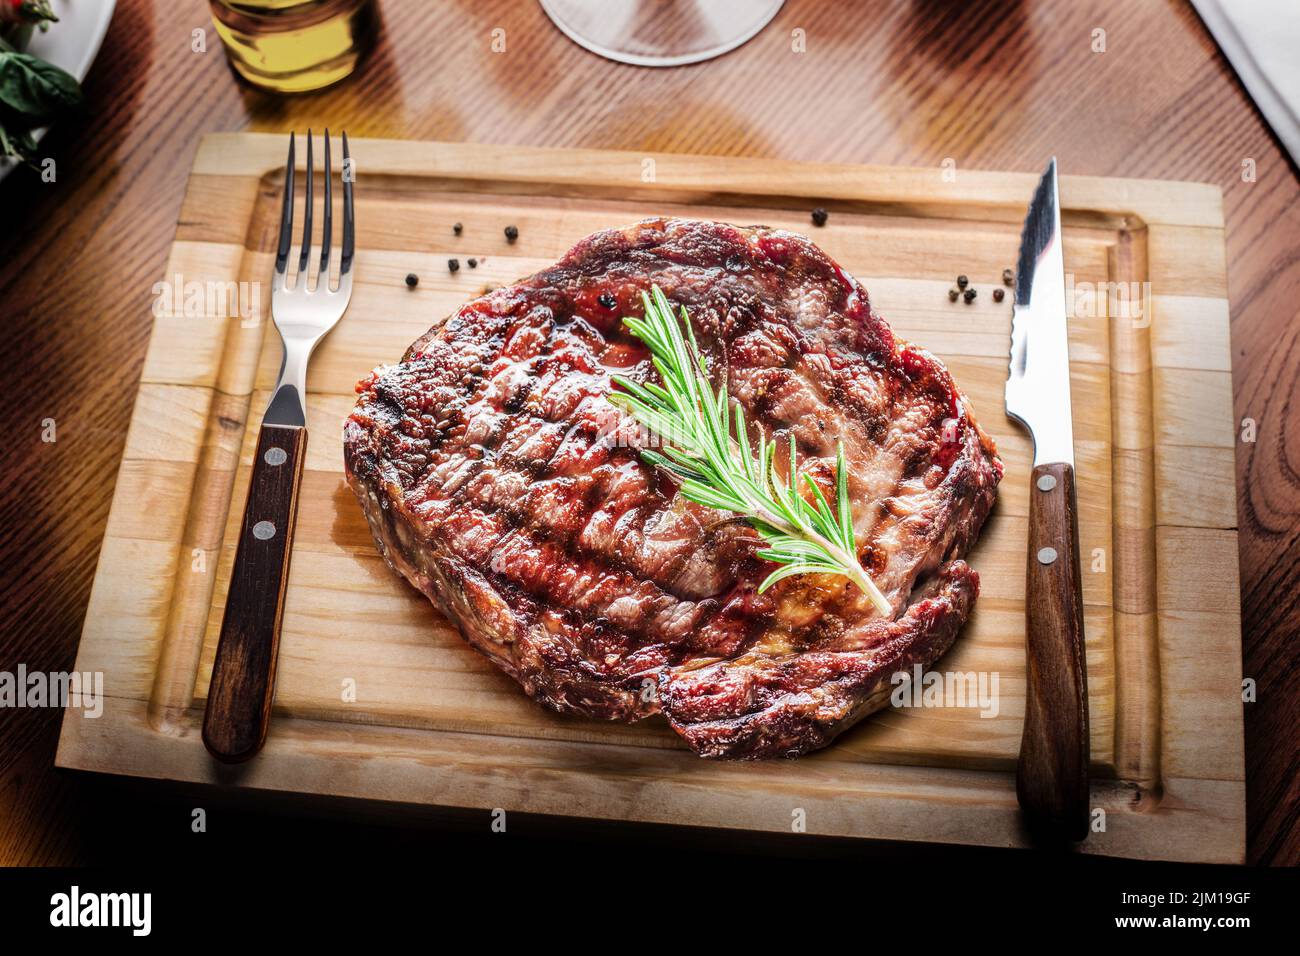 Grilled medium rare steak Mignon on wooden board ready to be eaten. Stock Photo